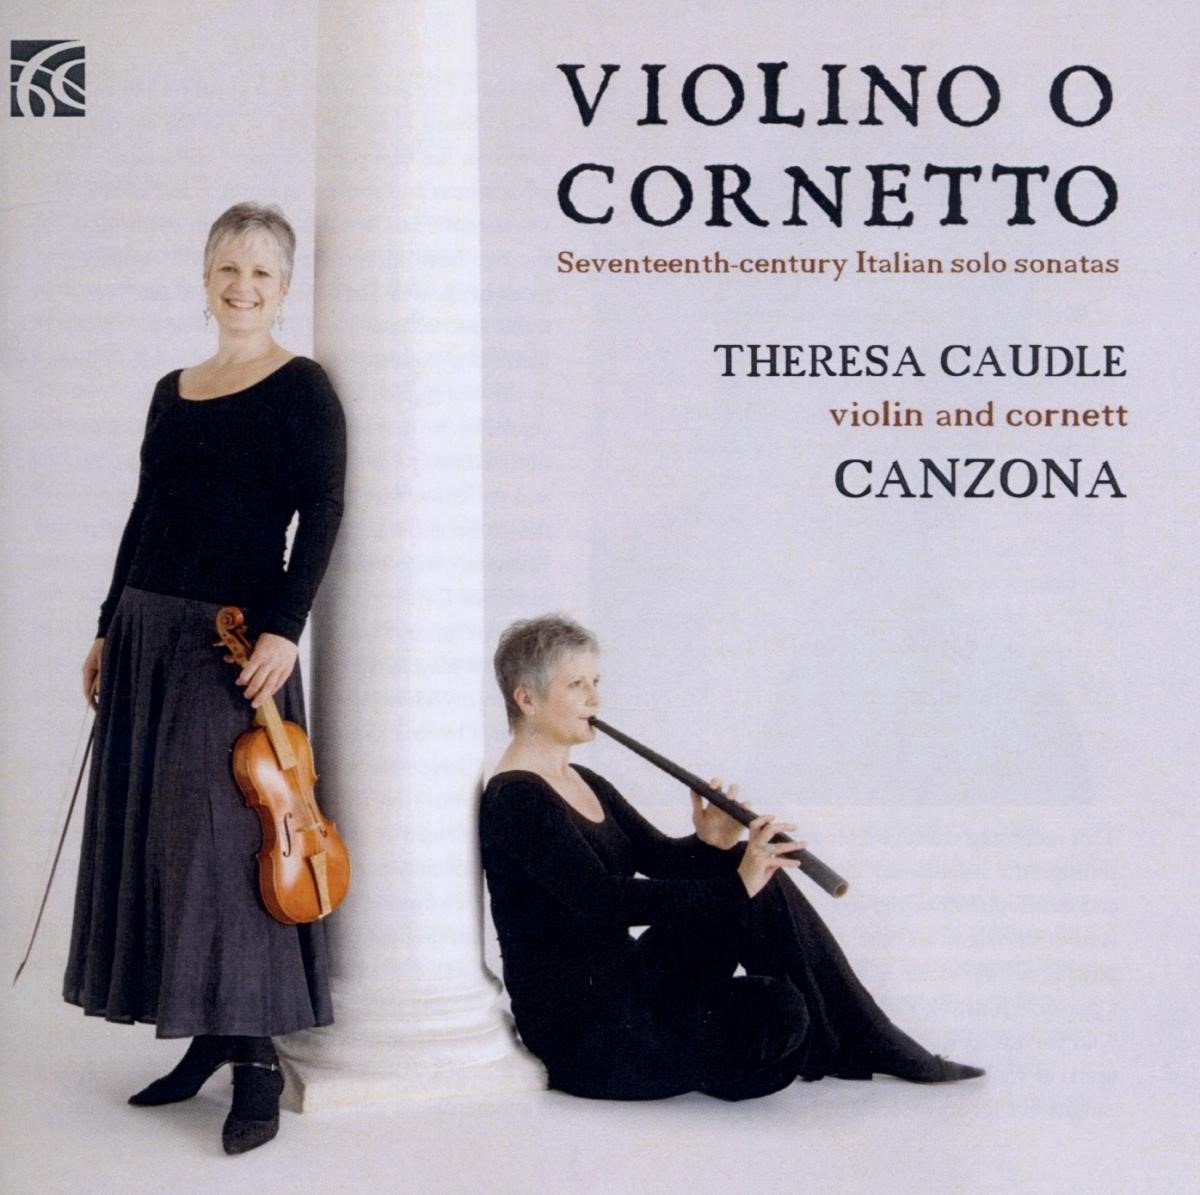 Canzona Theresa Caudle - Violino O Cornetto - 17th Century I (CD) - Canzona Theresa Caudle